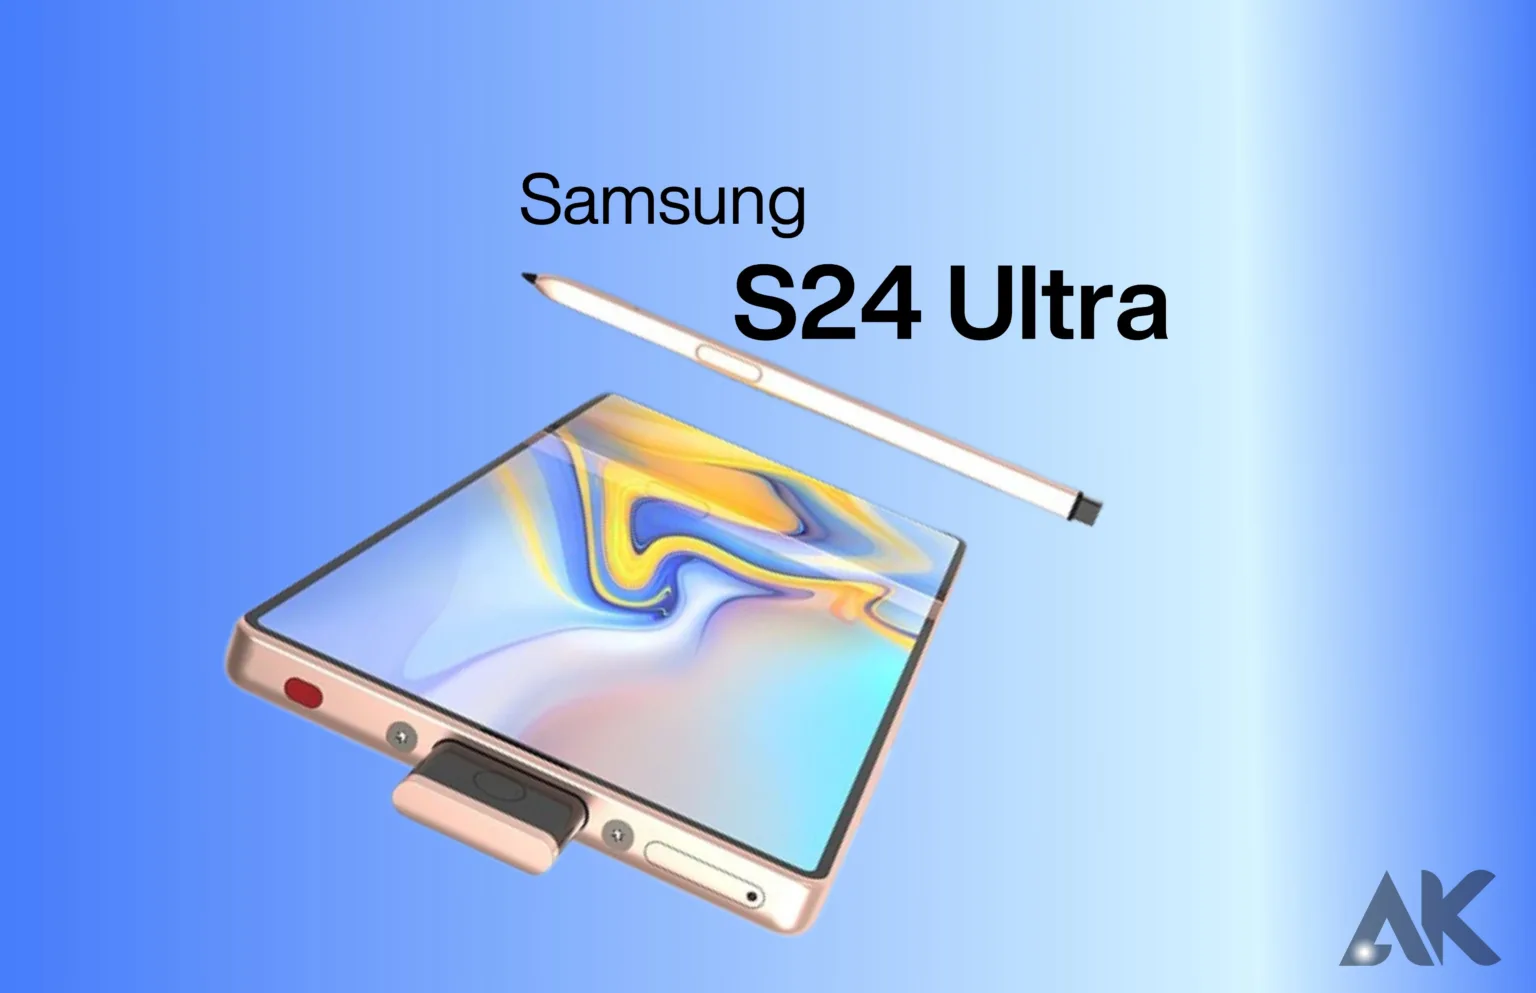 the Samsung S24 Ultra display